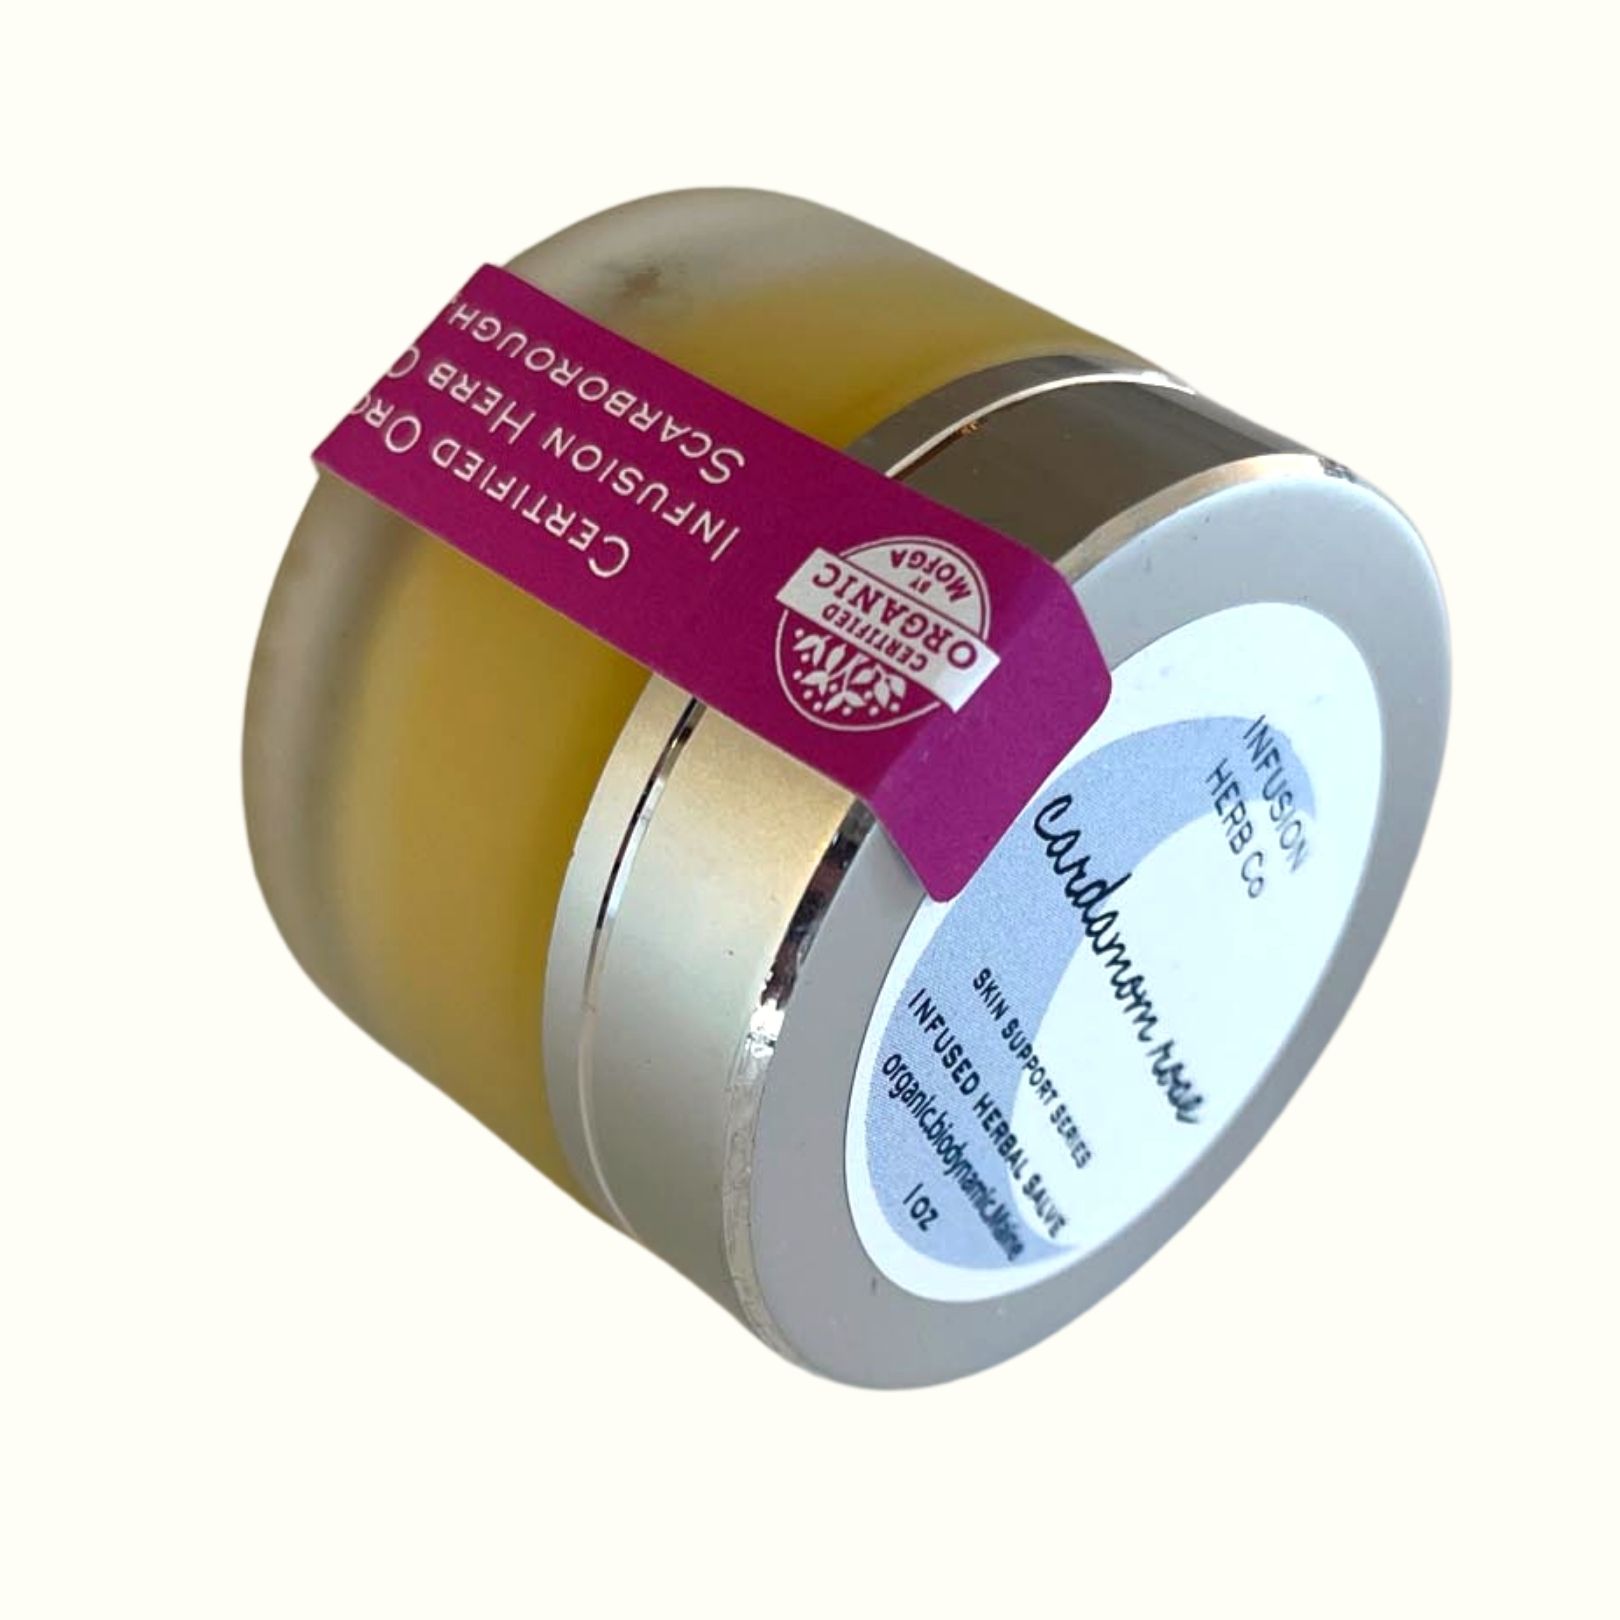 Perfumed Body Salve Aromatic Skin Occlusive Unisex Mahogany